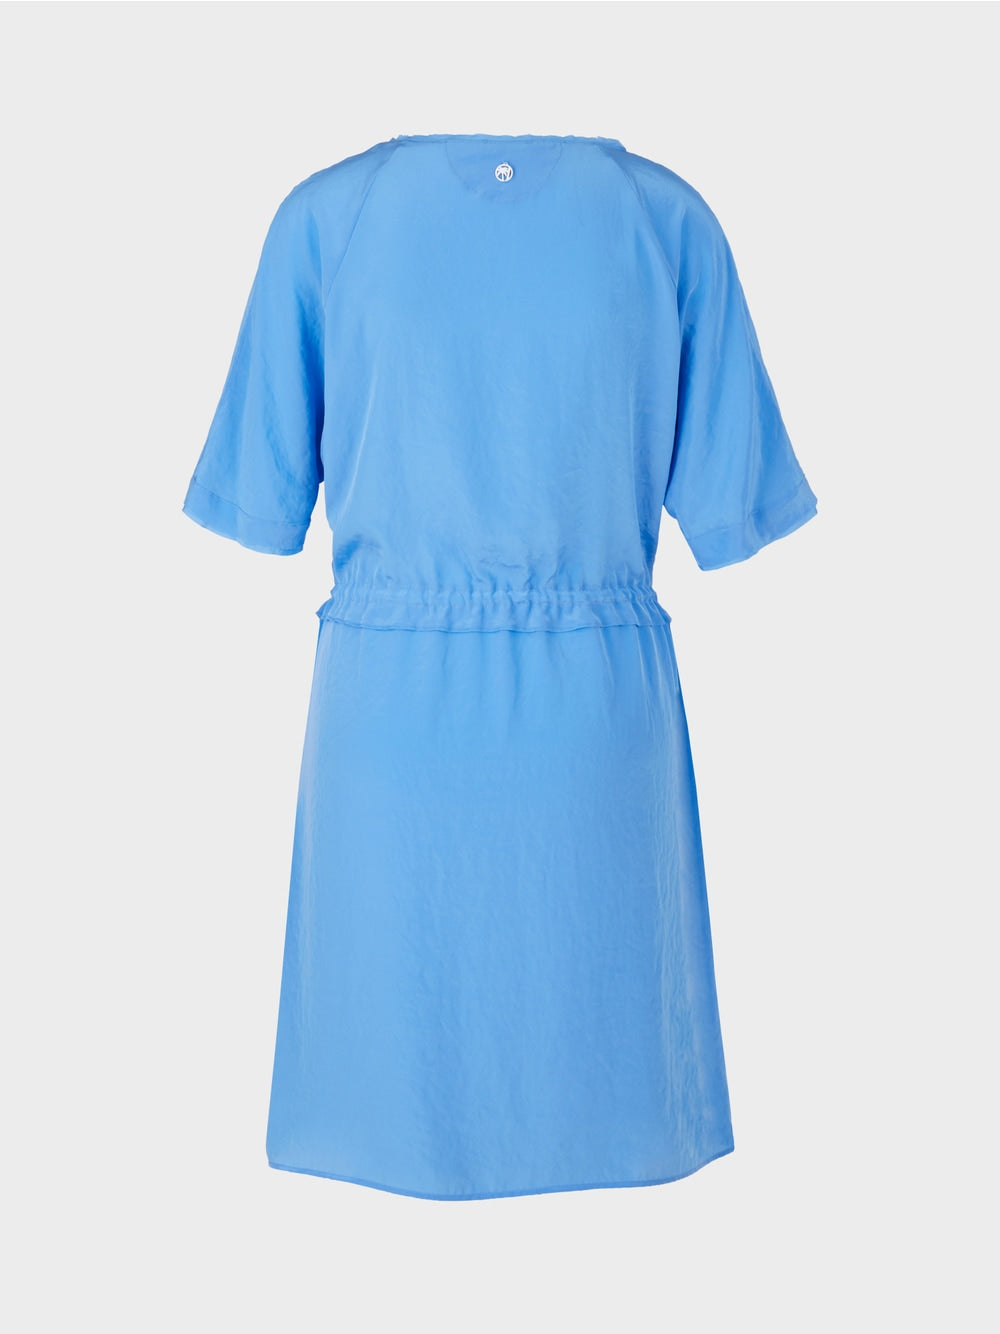 Marc Cain Bright Azure Blue Casual leisure dress